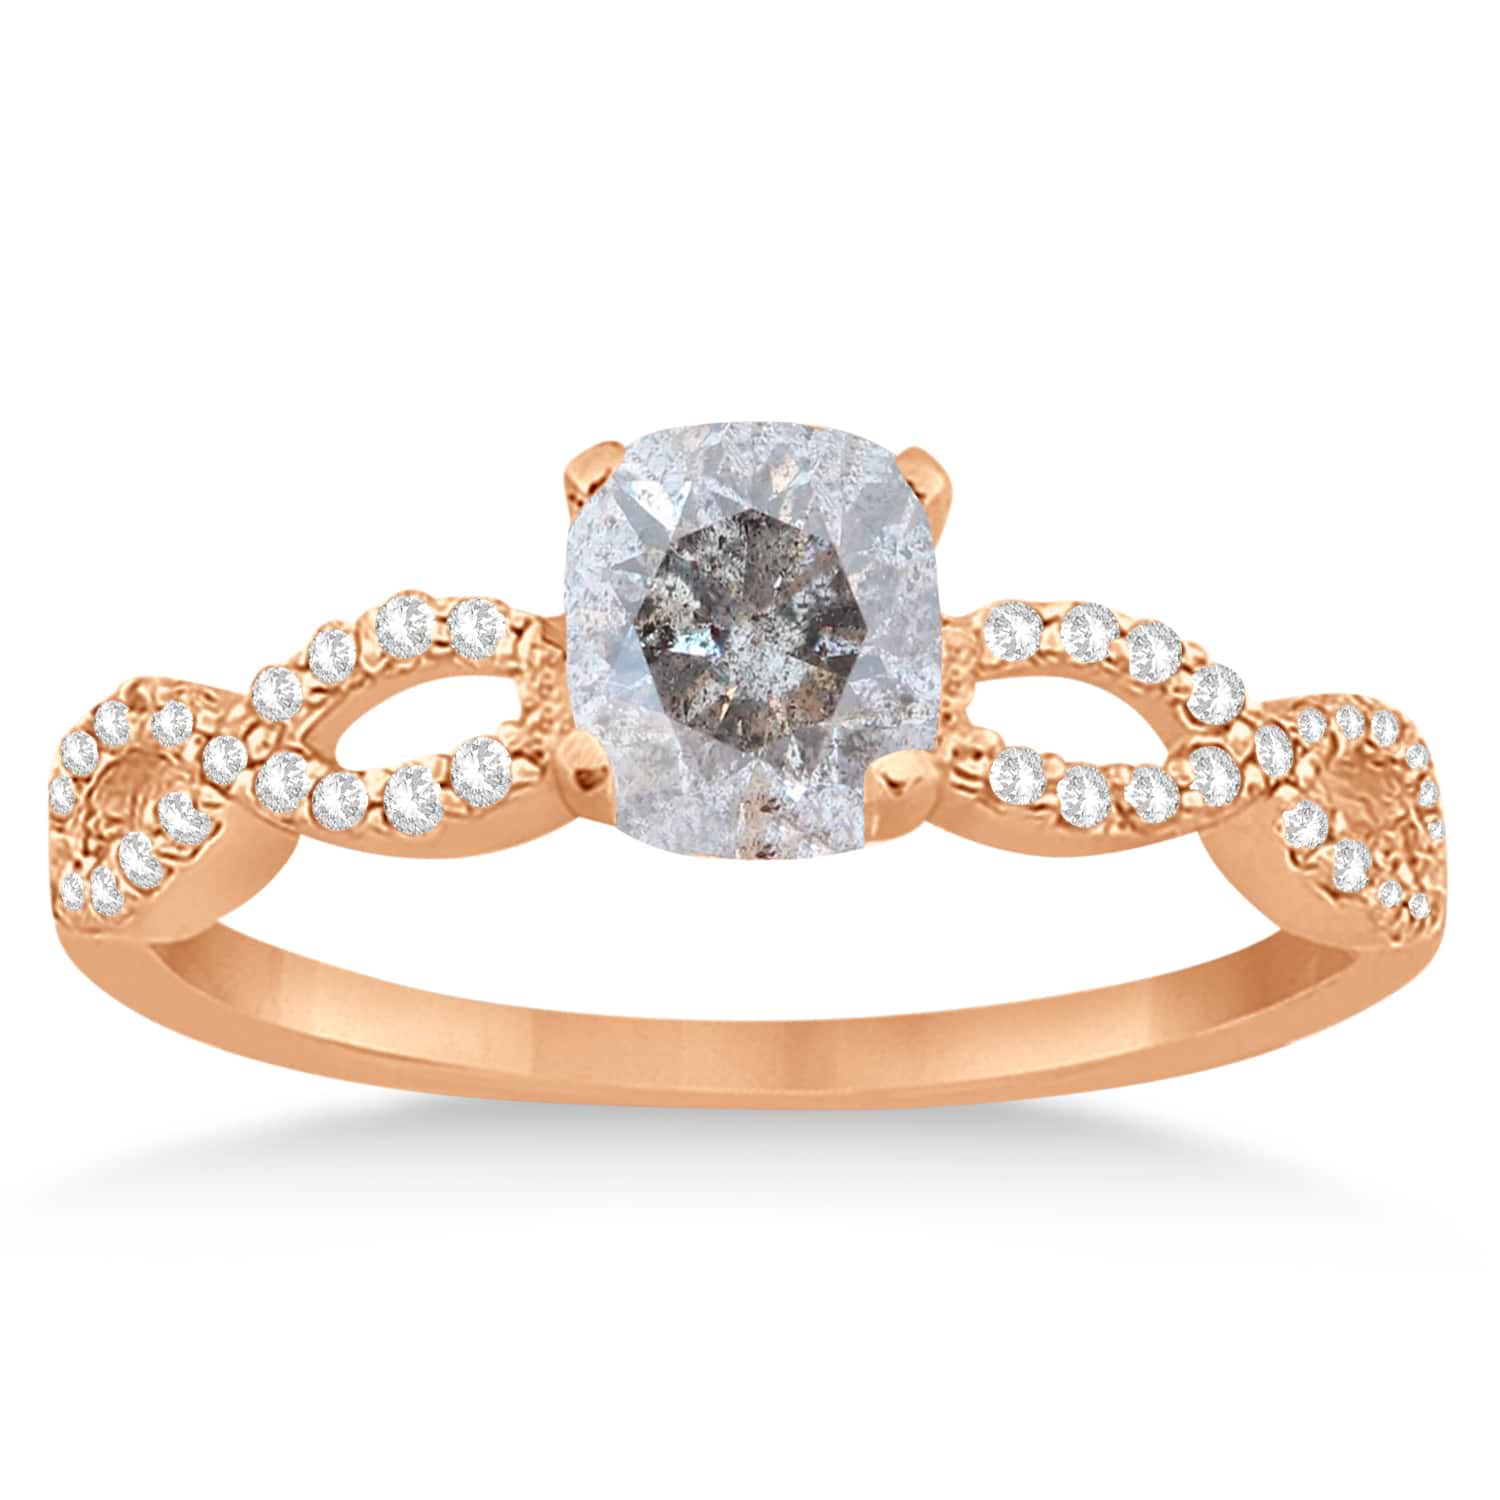 Infinity Cushion-Cut Salt & Pepper Diamond Bridal Ring Set 14k Rose Gold (1.13ct)